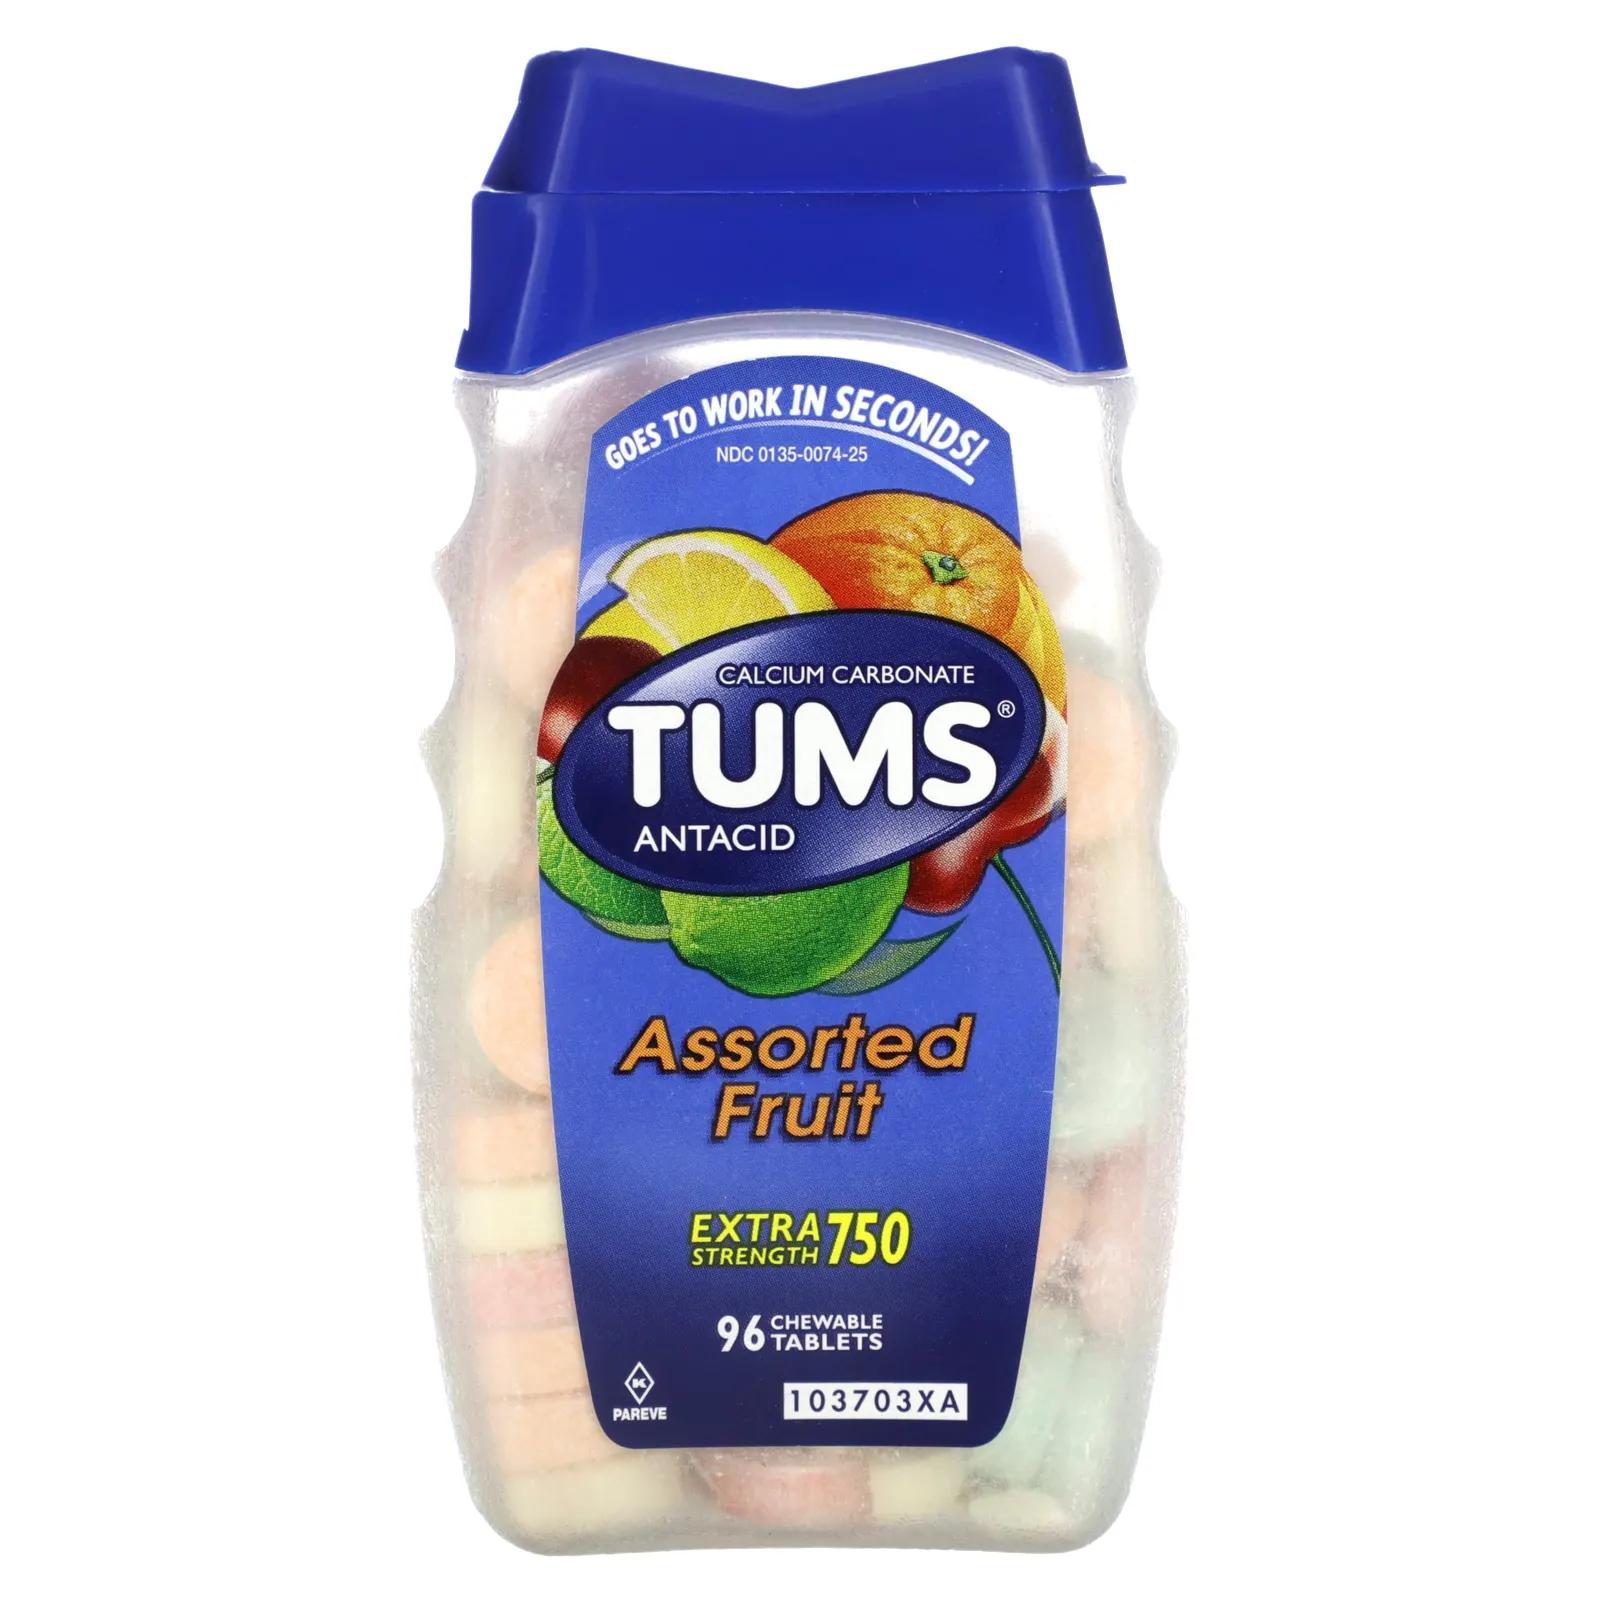 Tums TUMS Extra Strength 750 Антацидное средство Фруктовое ассорти 96 таблеток антацидные коктейли tums extra strength berry fusion 140 жевательных таблеток